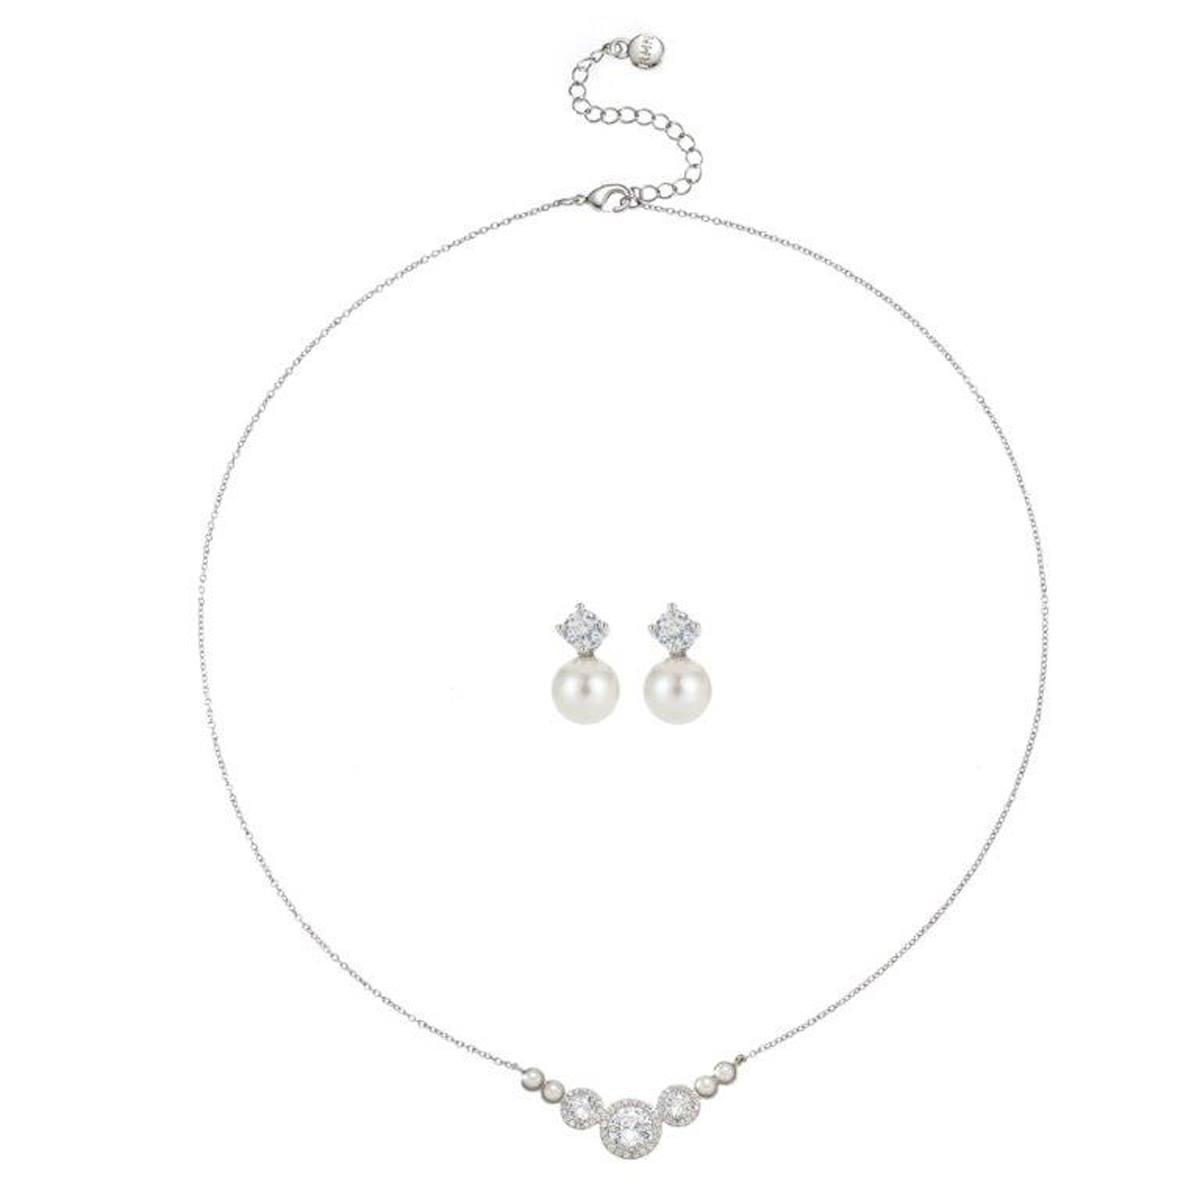 Roman Silver-Tone CZ & Pearl Necklace & Earrings Set